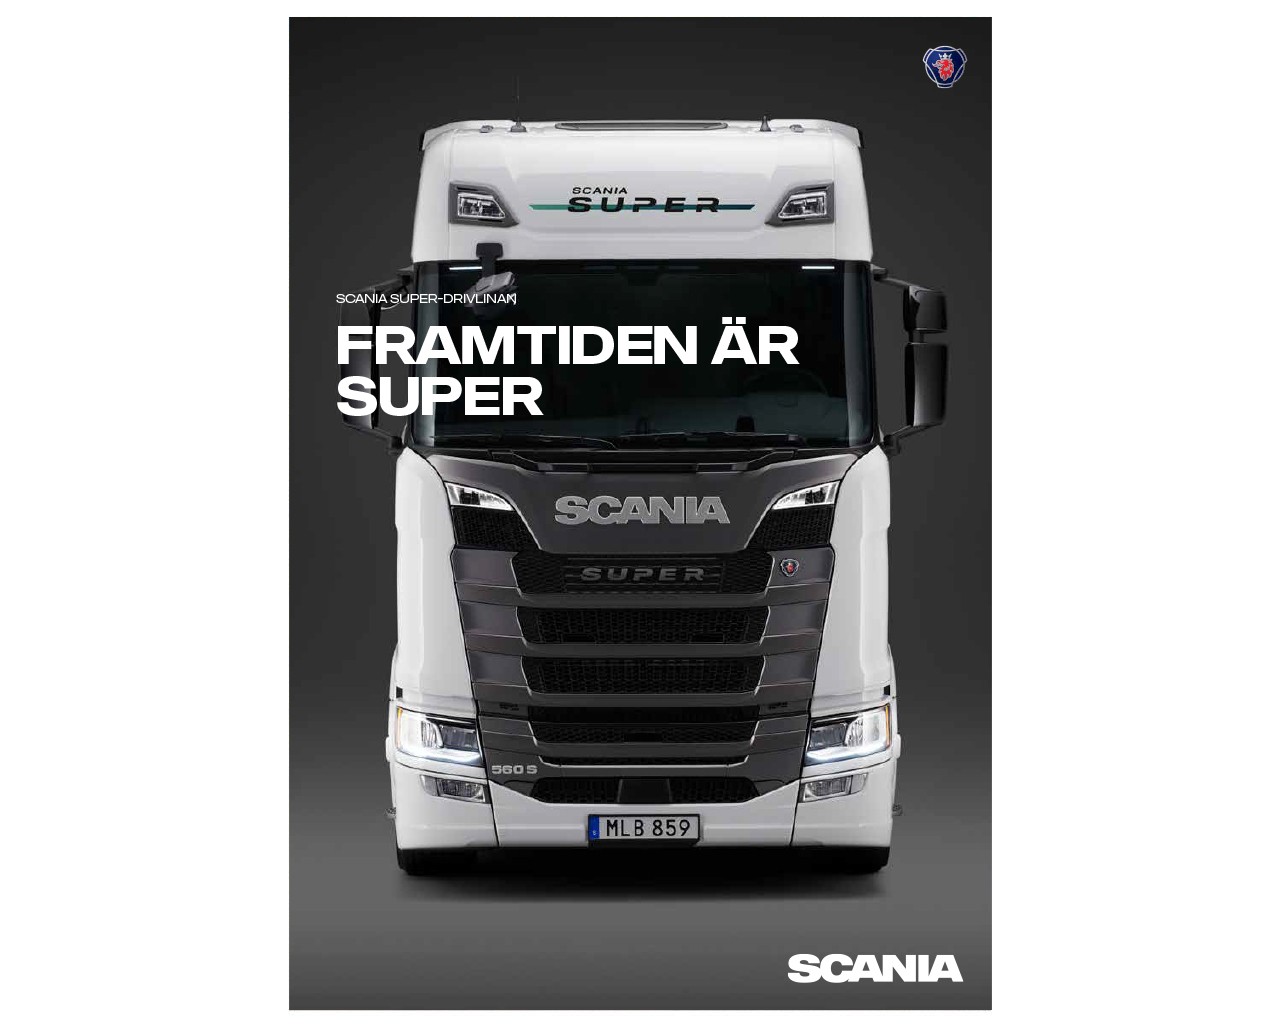 Scania Superdrivlinan broschyr